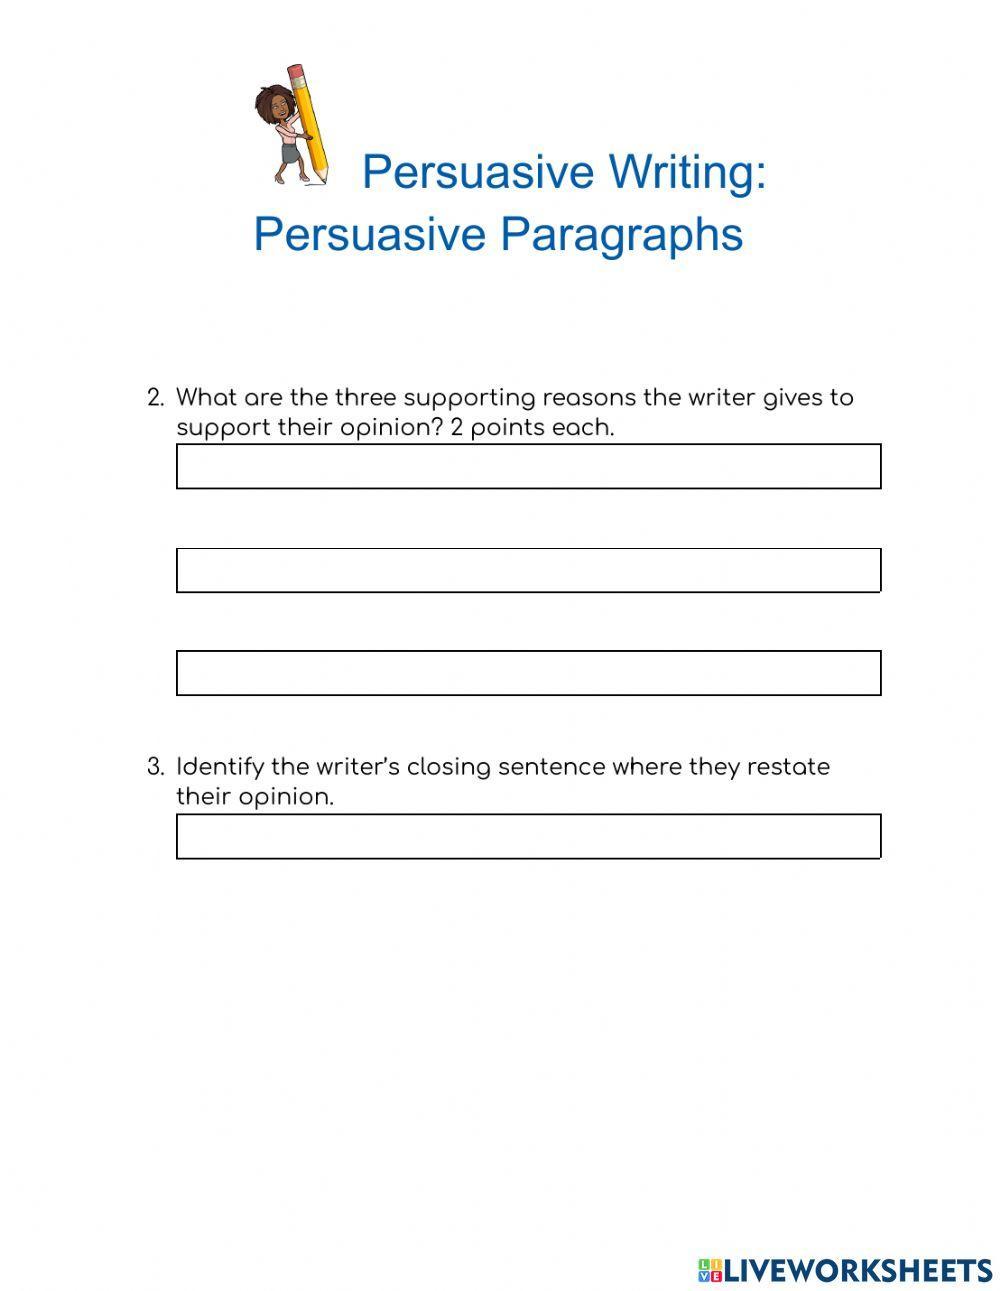 Persuasive Writing: The Persuasive Paragraph